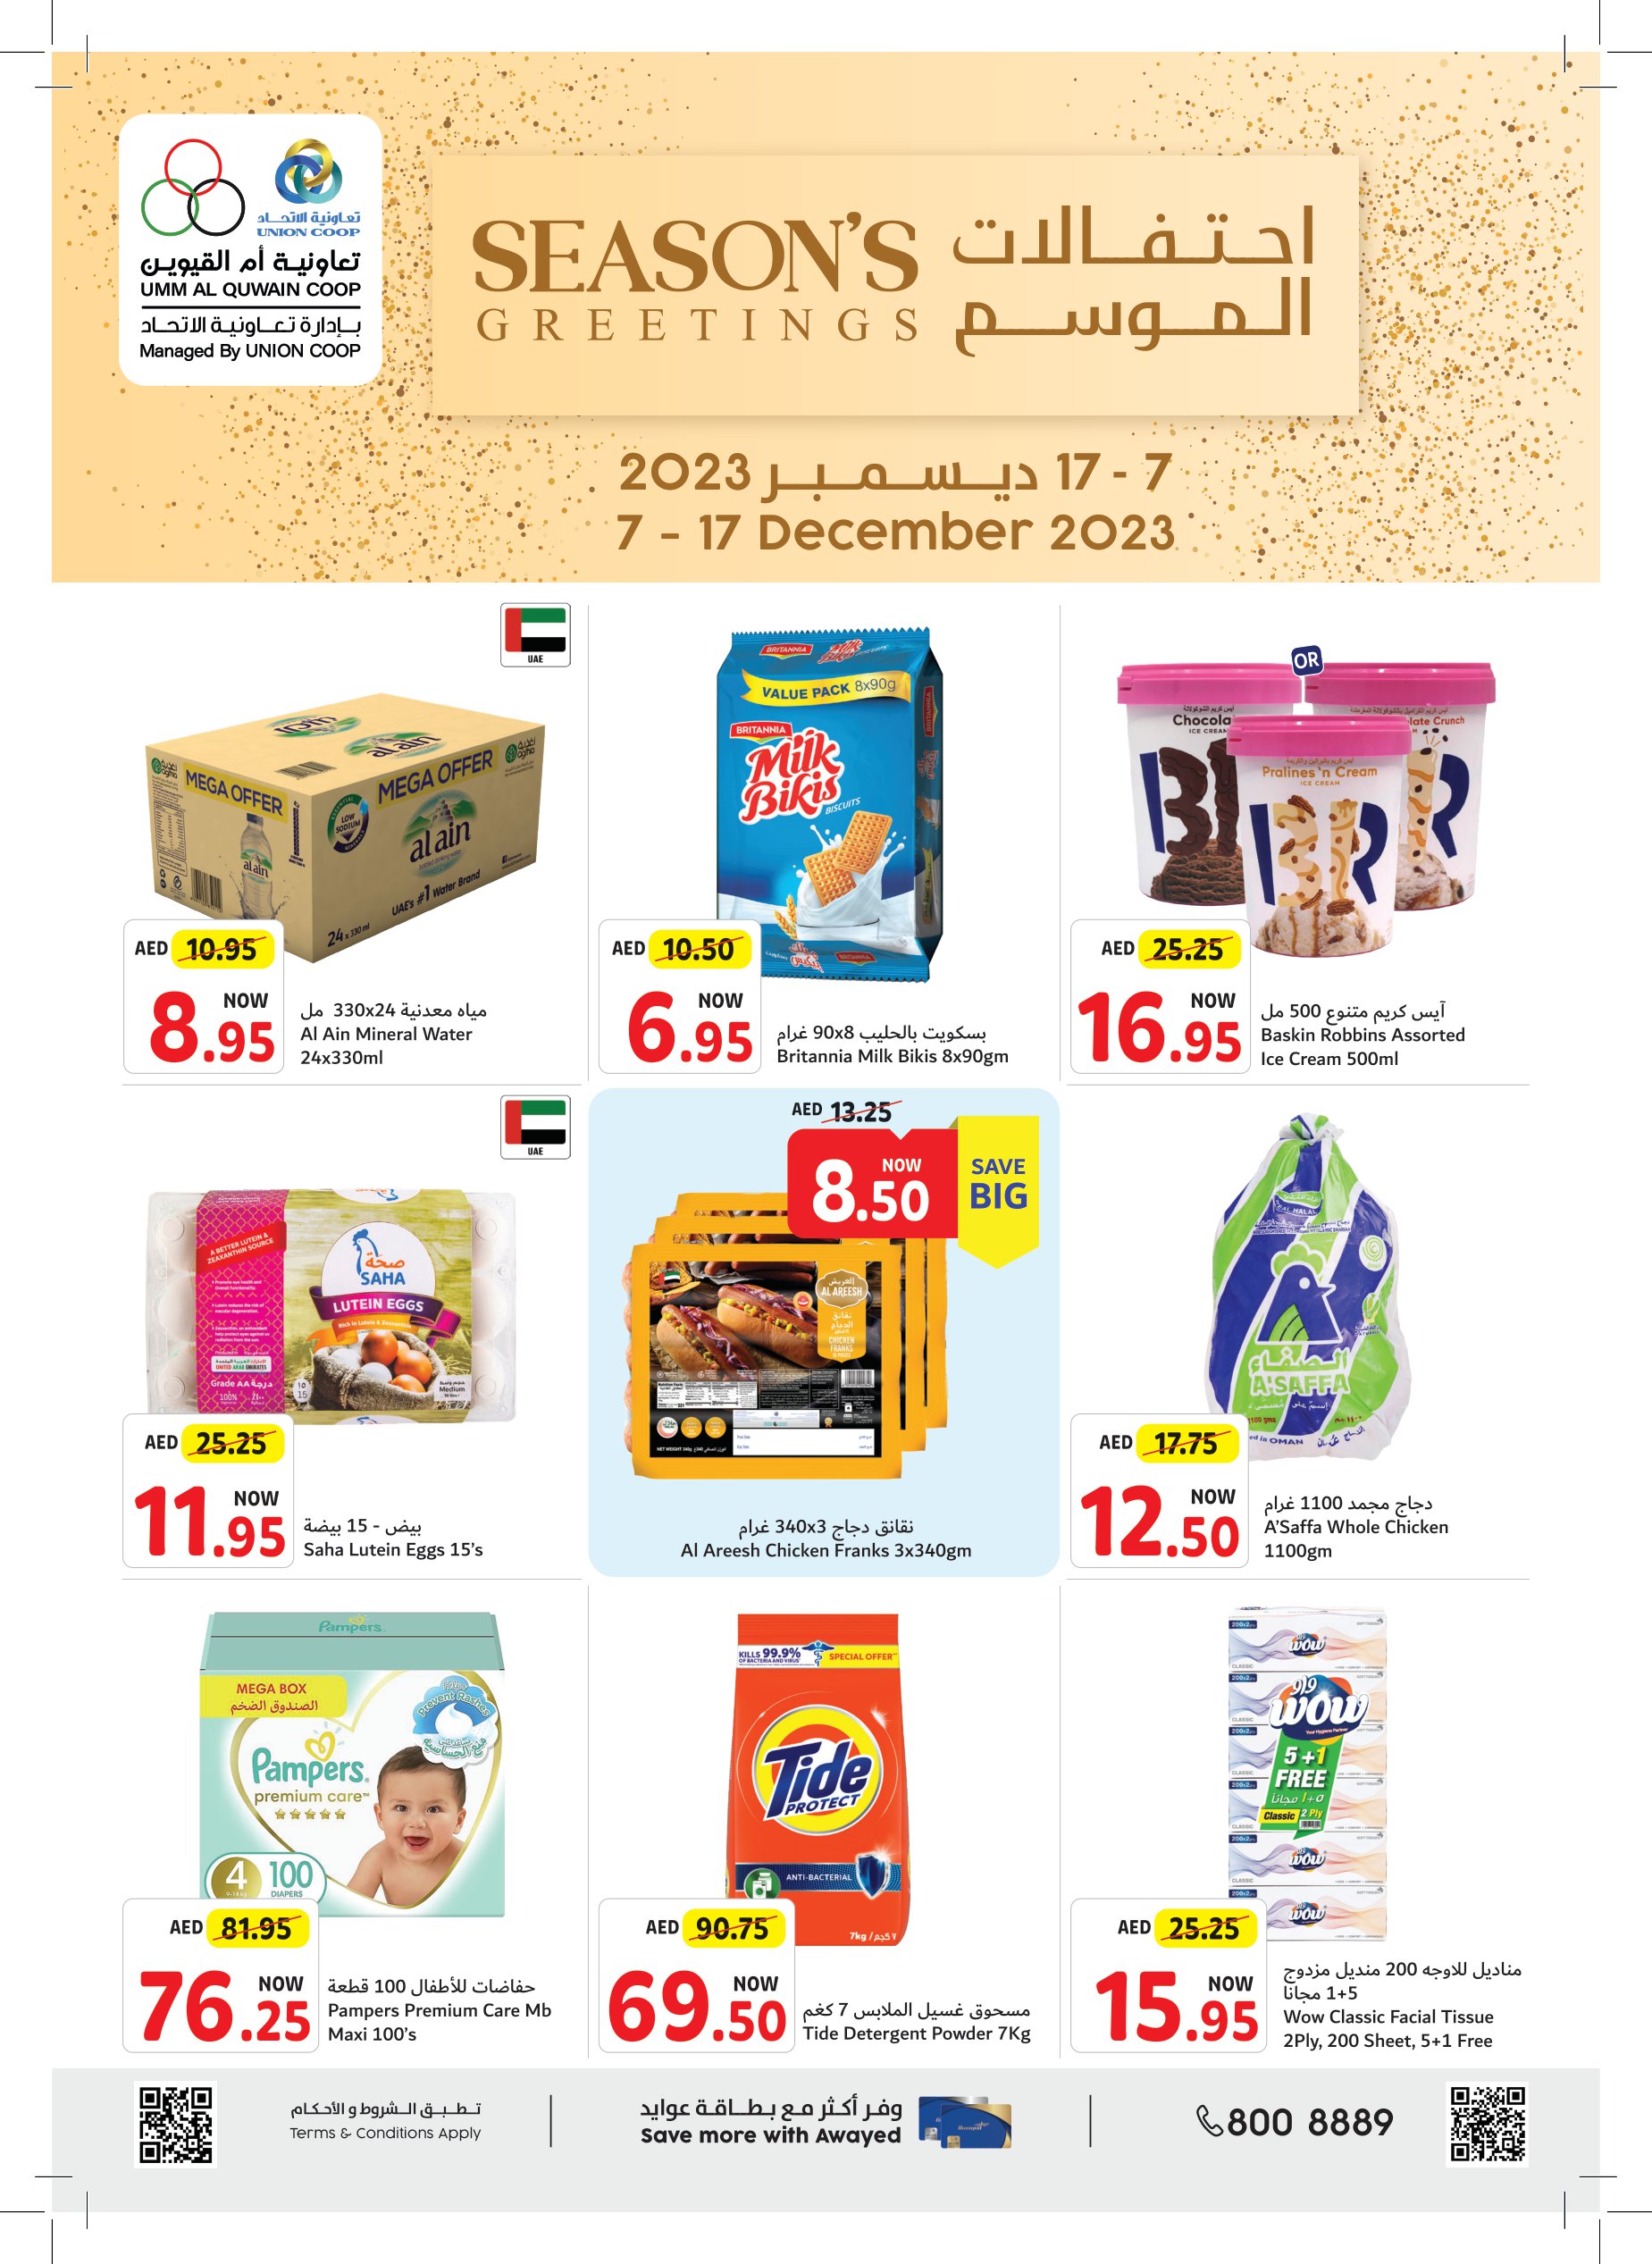 Page 1 at Seasons Greetings Deals at Umm Al Quwain Coop UAE